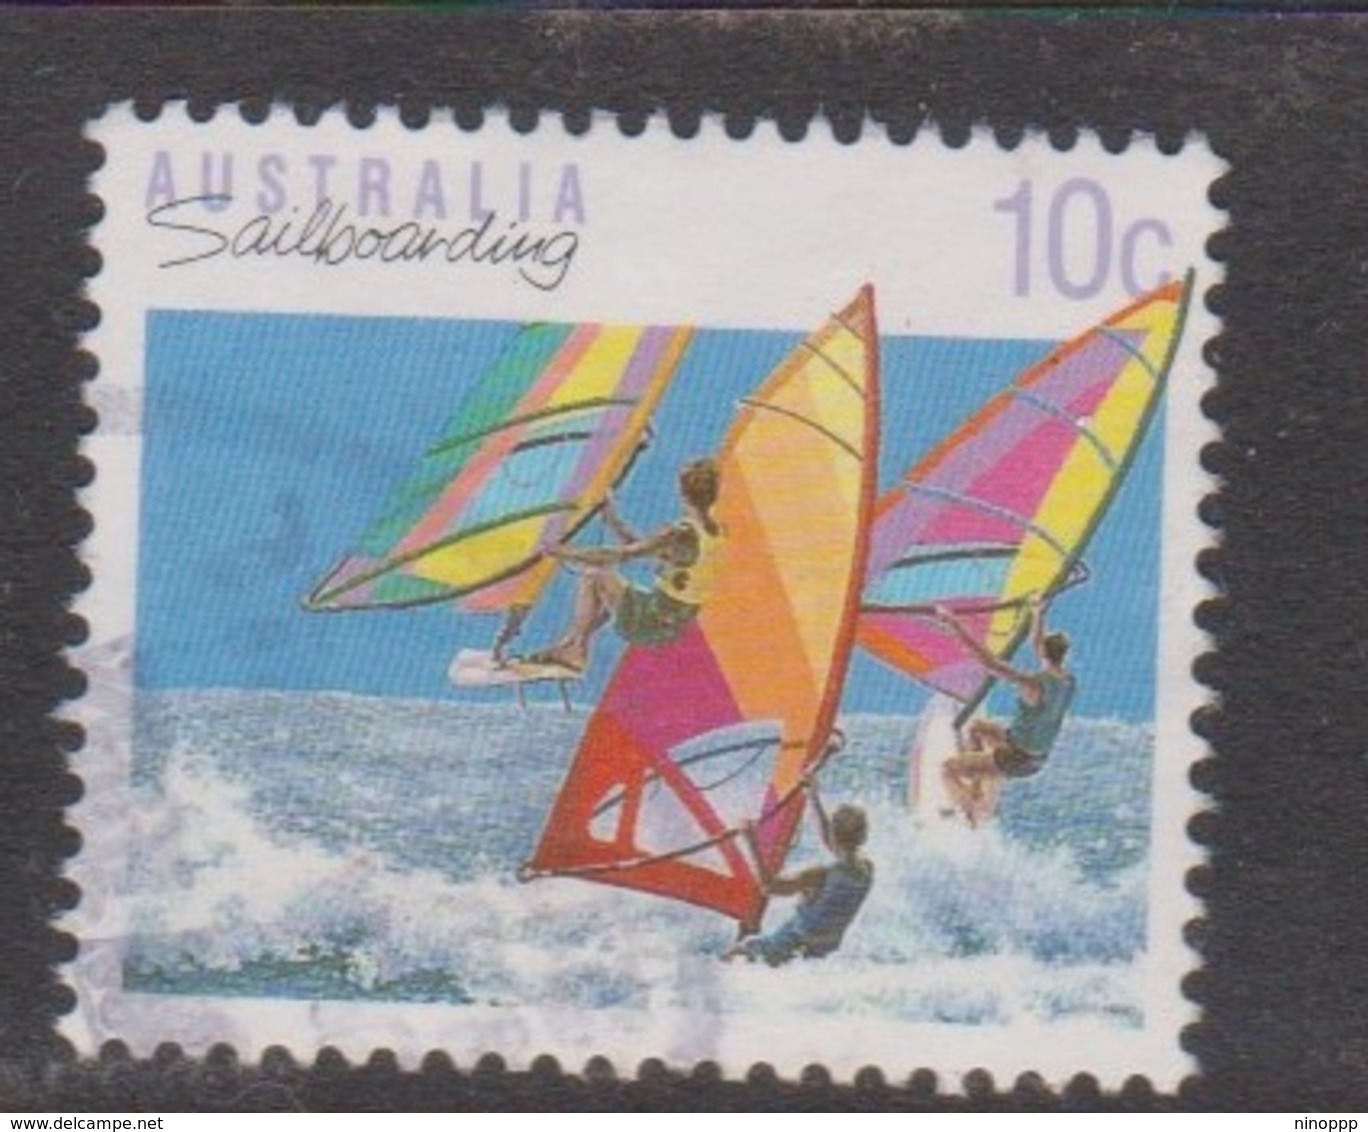 Australia ASC 1228b 1990 Sports 10c Sailboarding Perf 14 X 14.5, Used - Ensayos & Reimpresiones